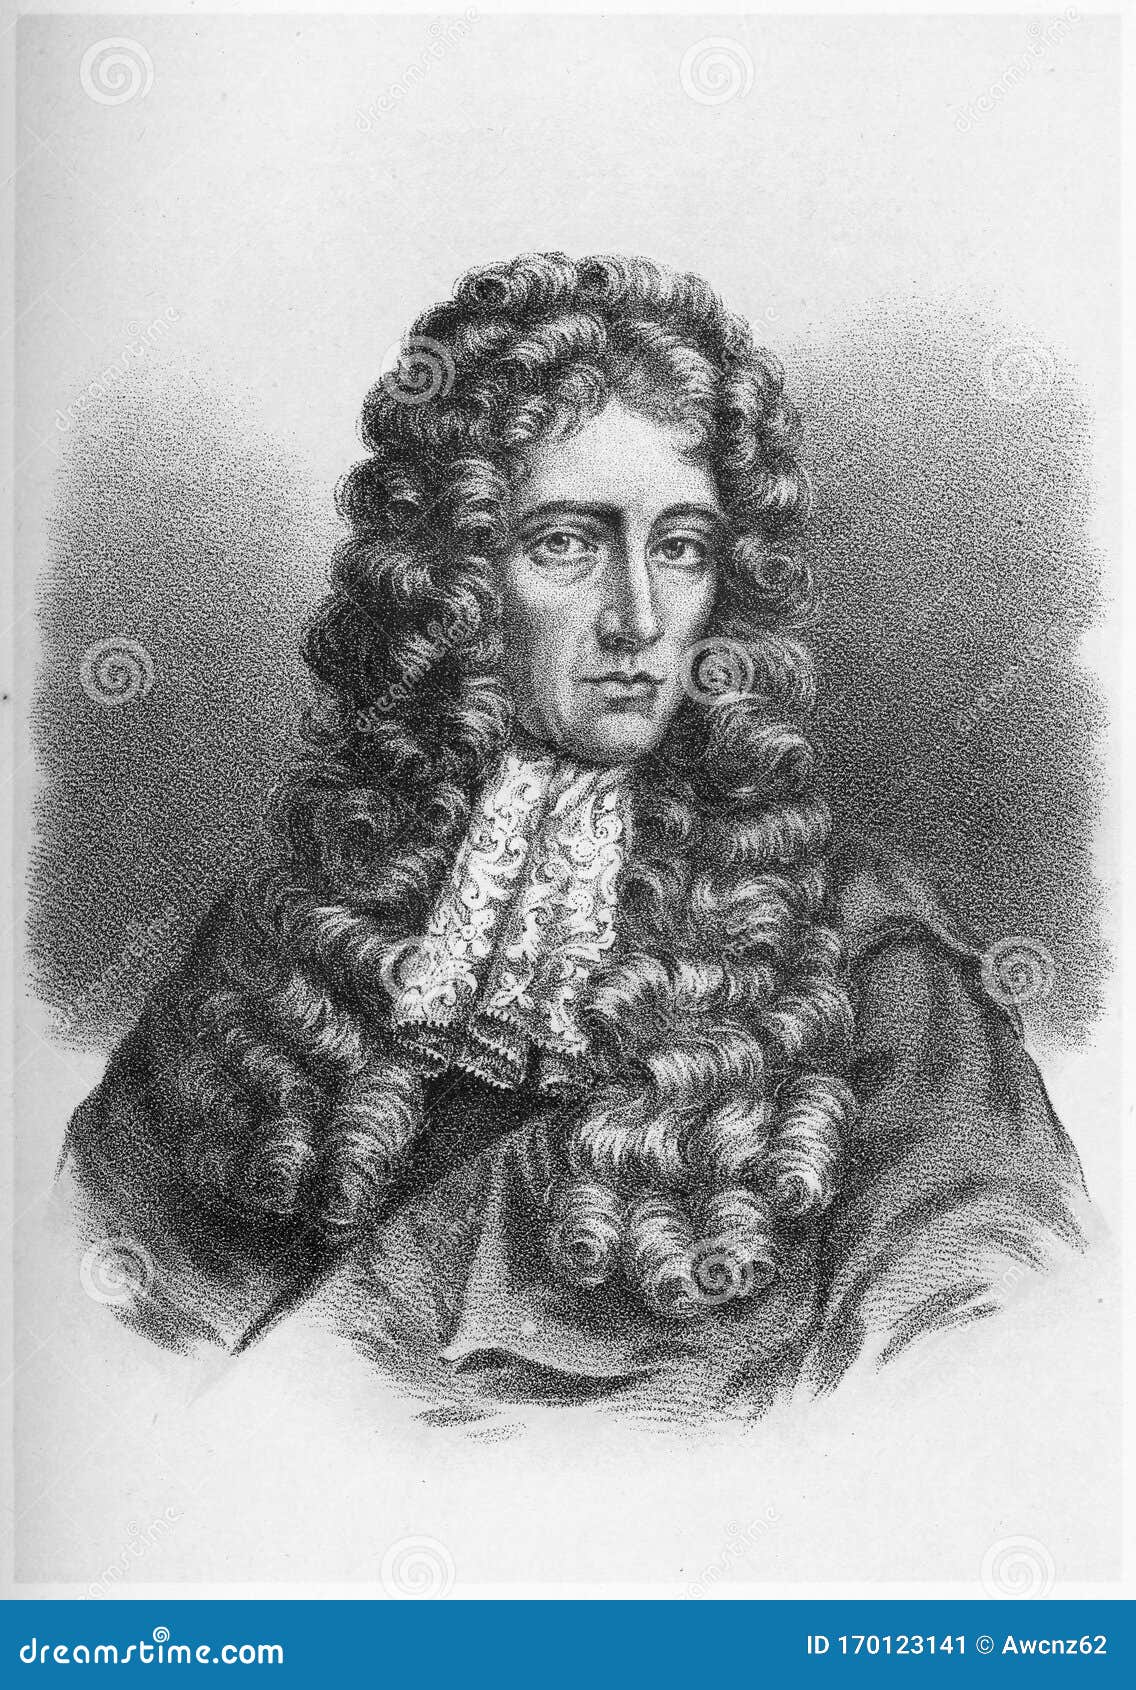 robert boyle, natural philosopher, chemist, physicist, and inventor